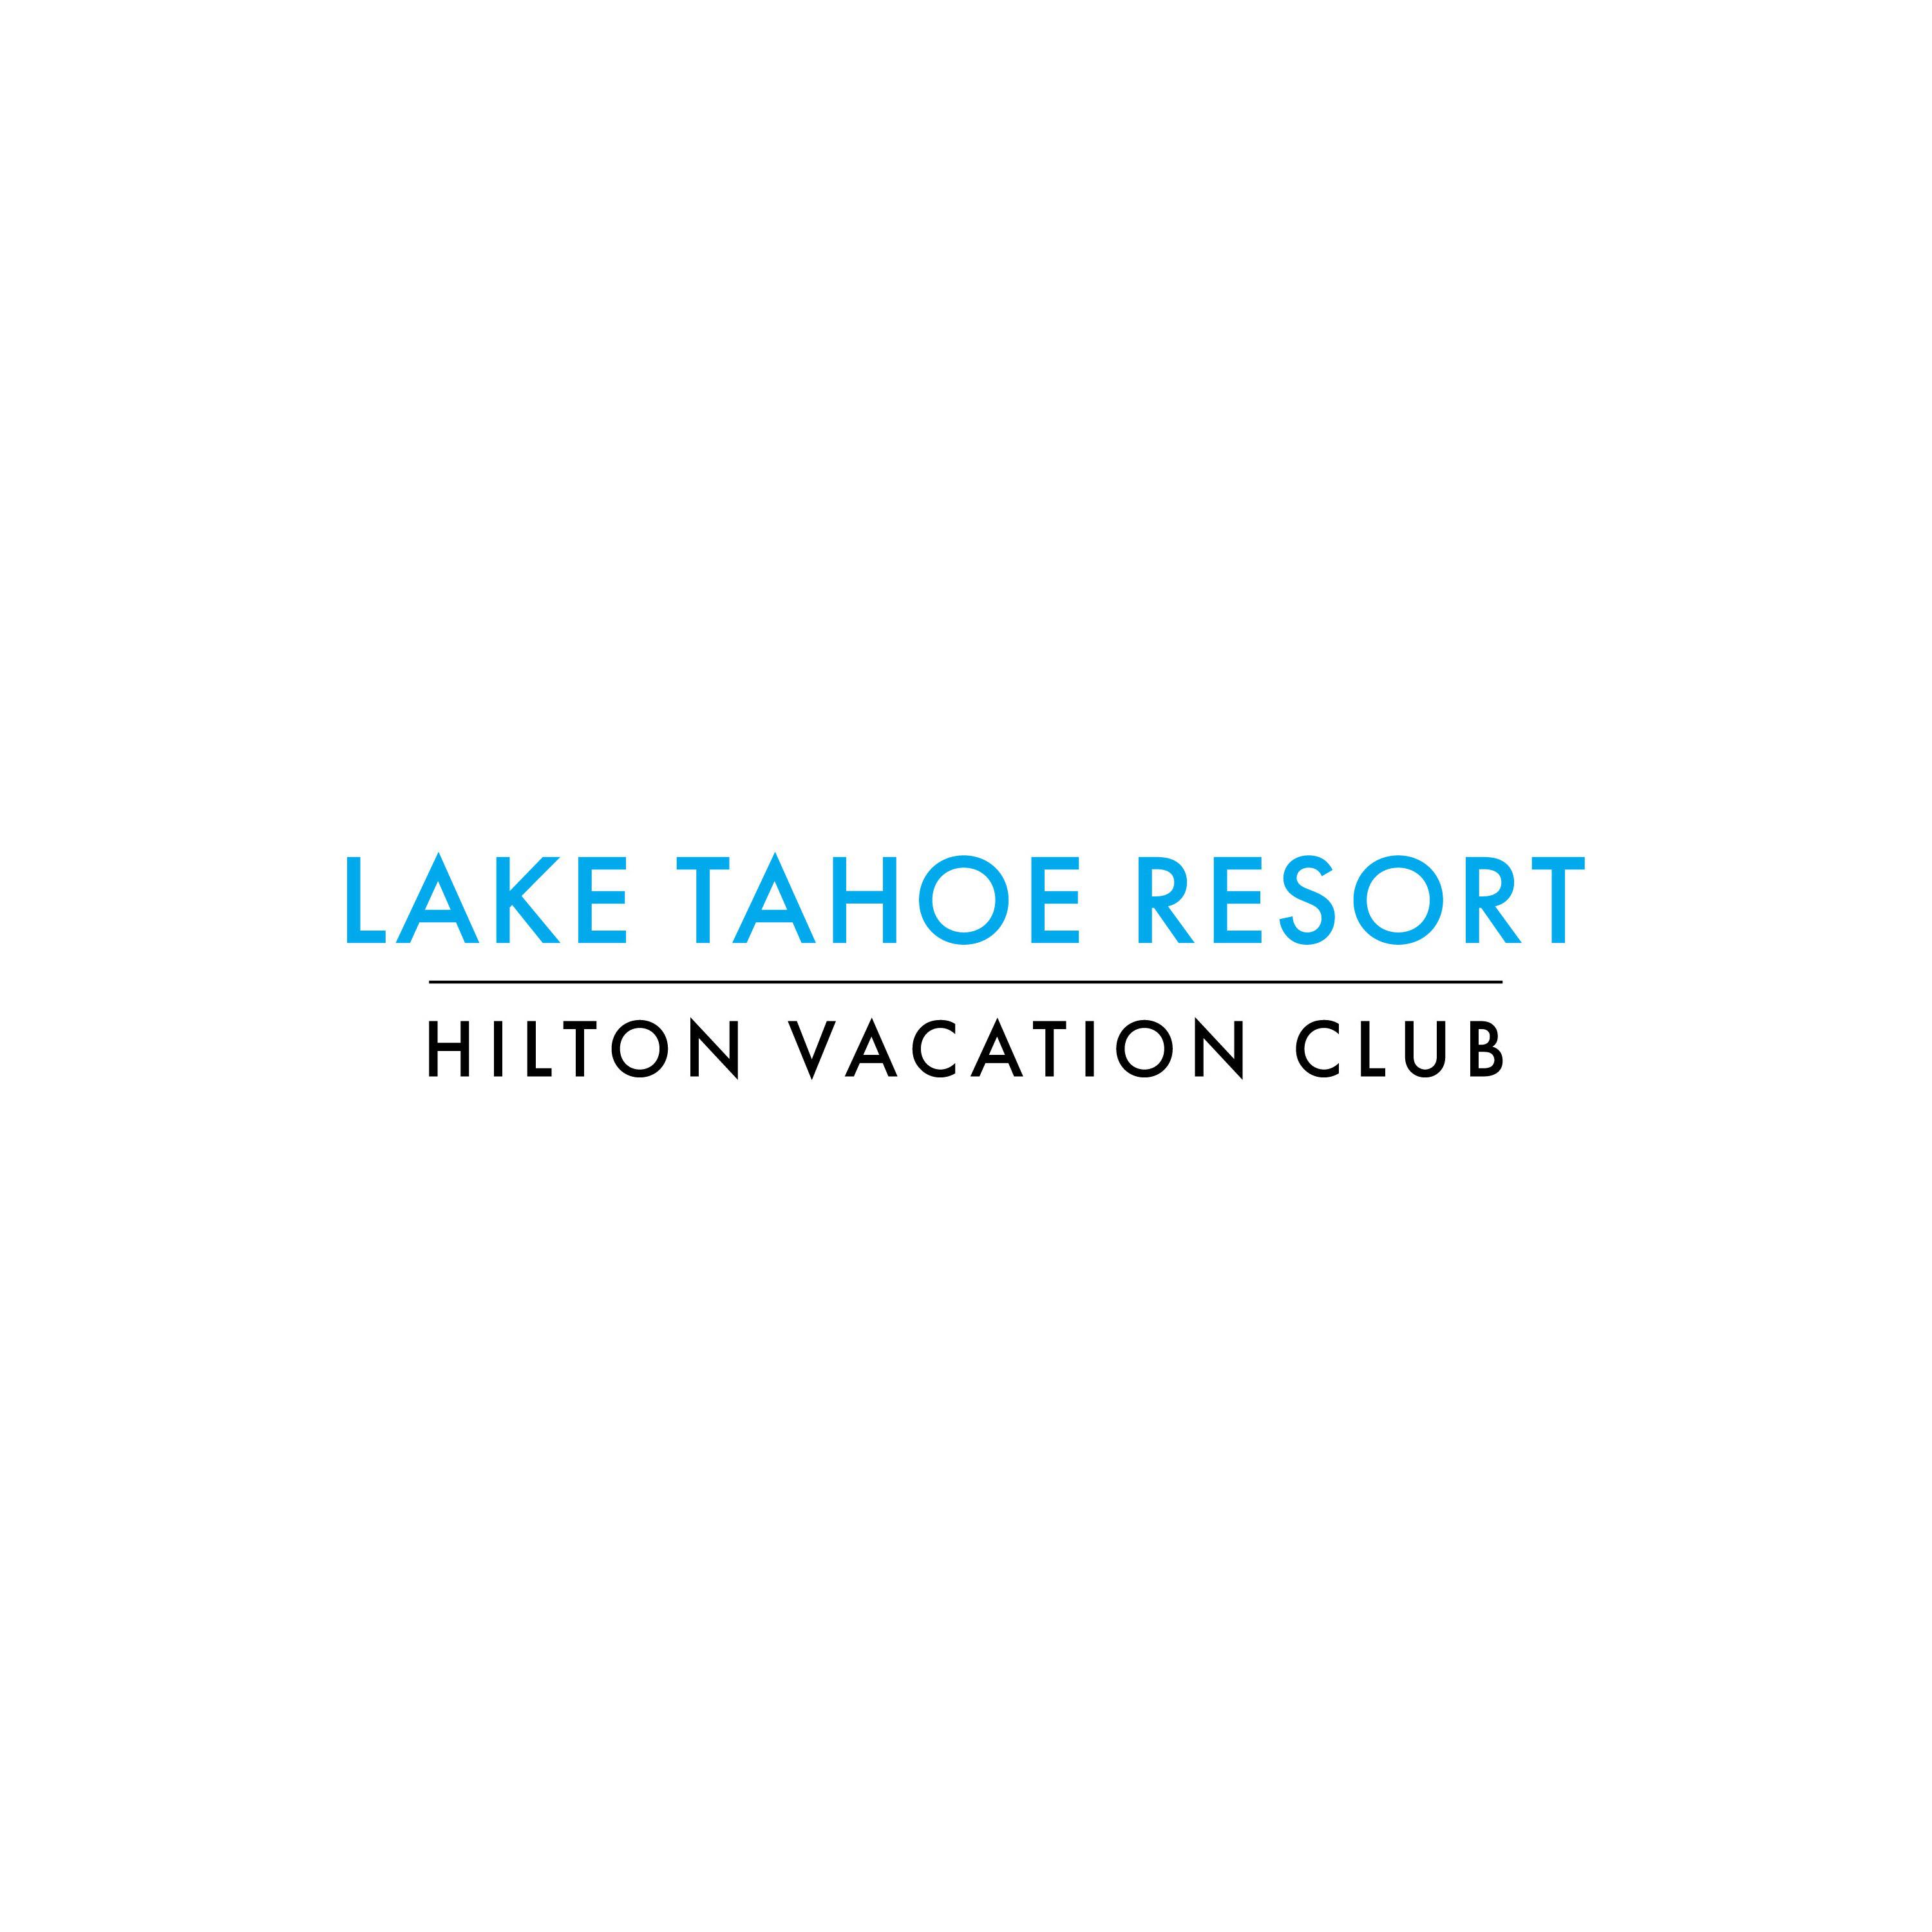 Hilton Vacation Club Lake Tahoe Resort - Closed